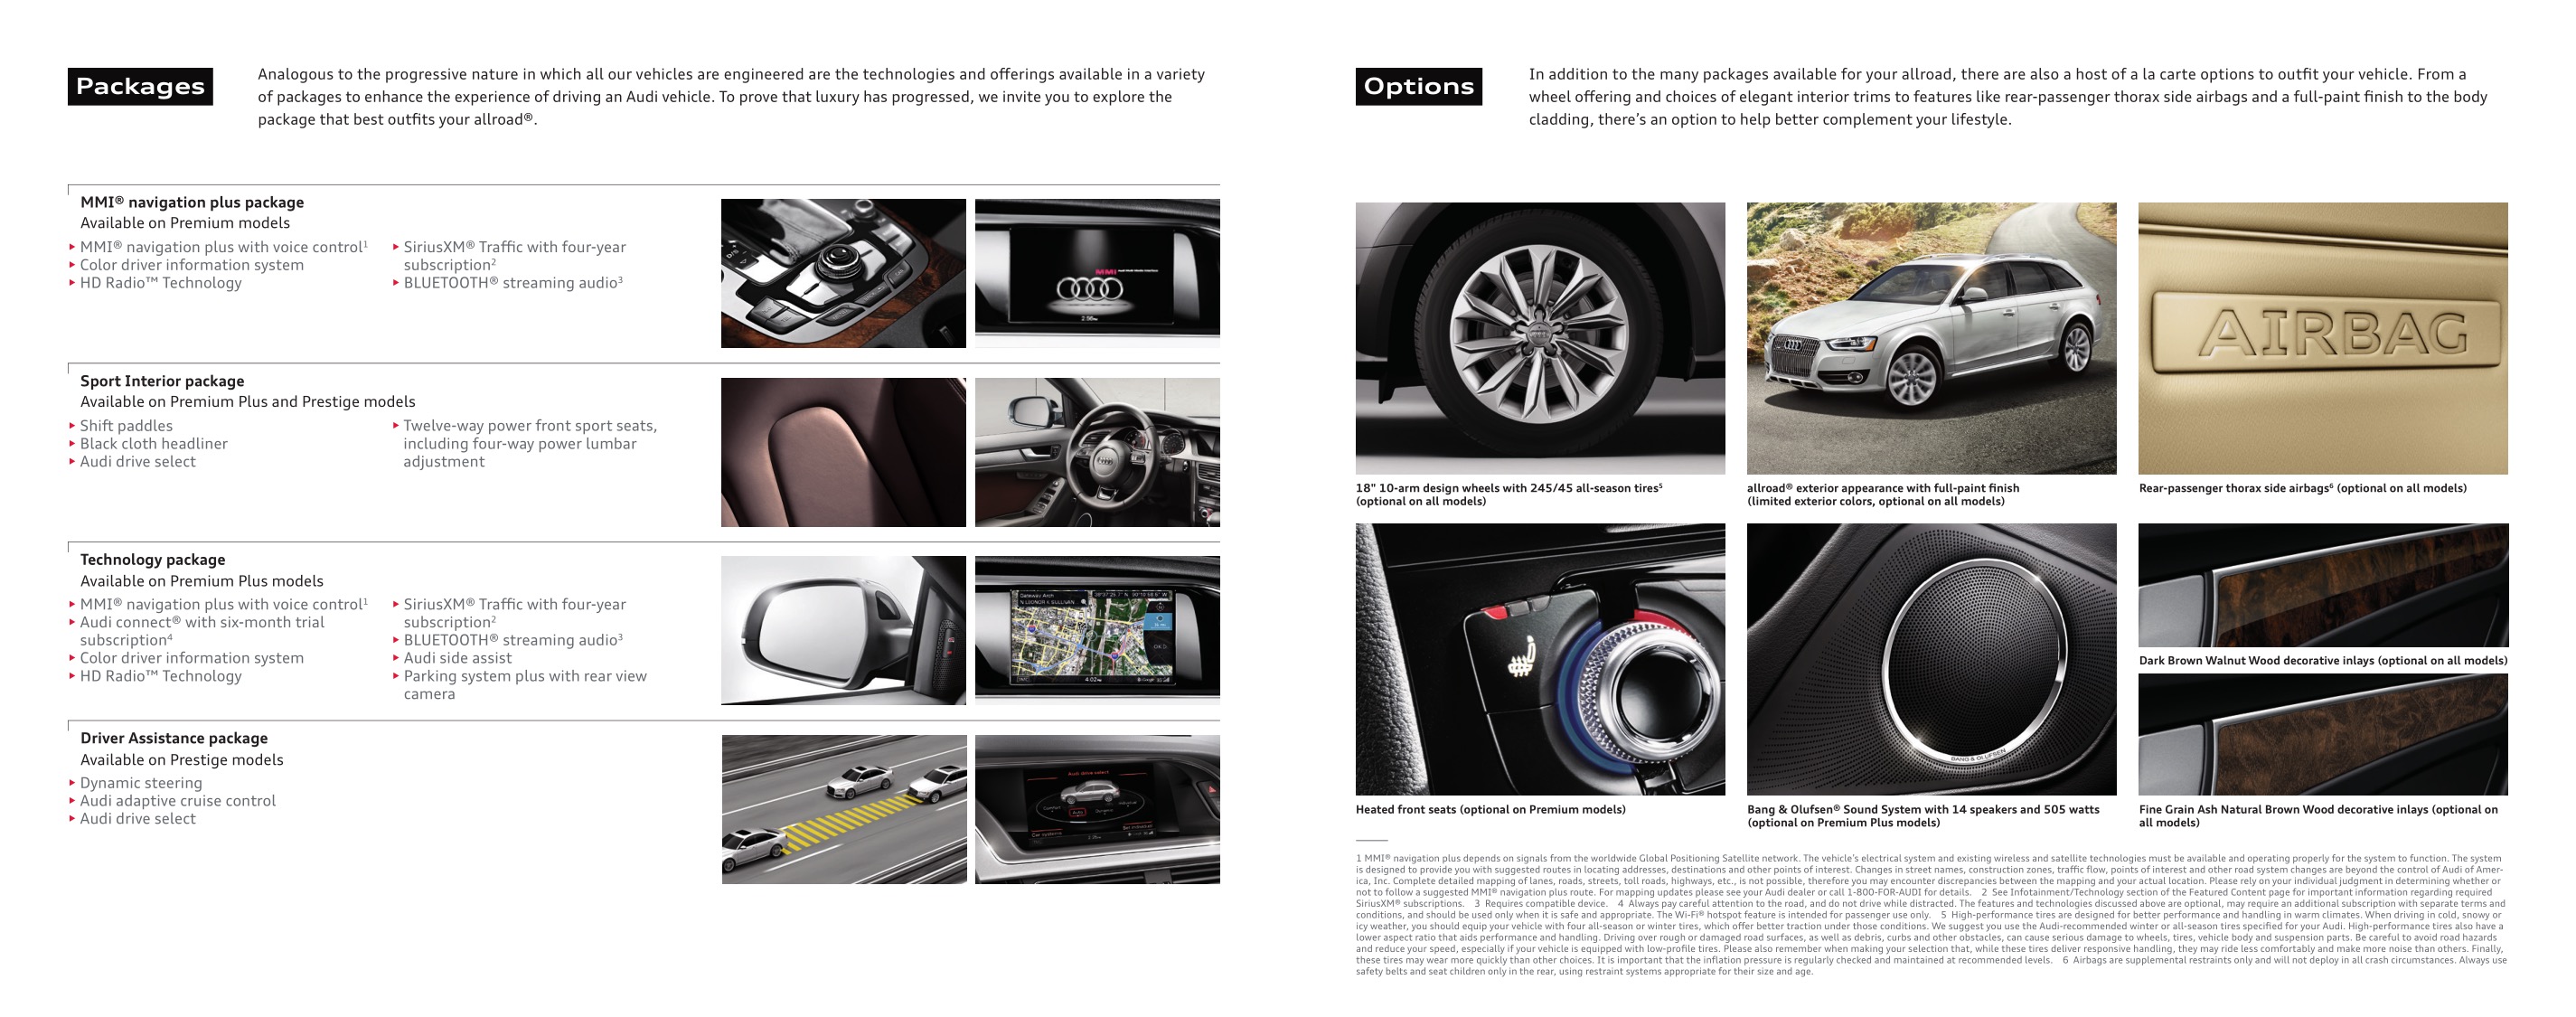 2015 Audi Allroad Brochure Page 3